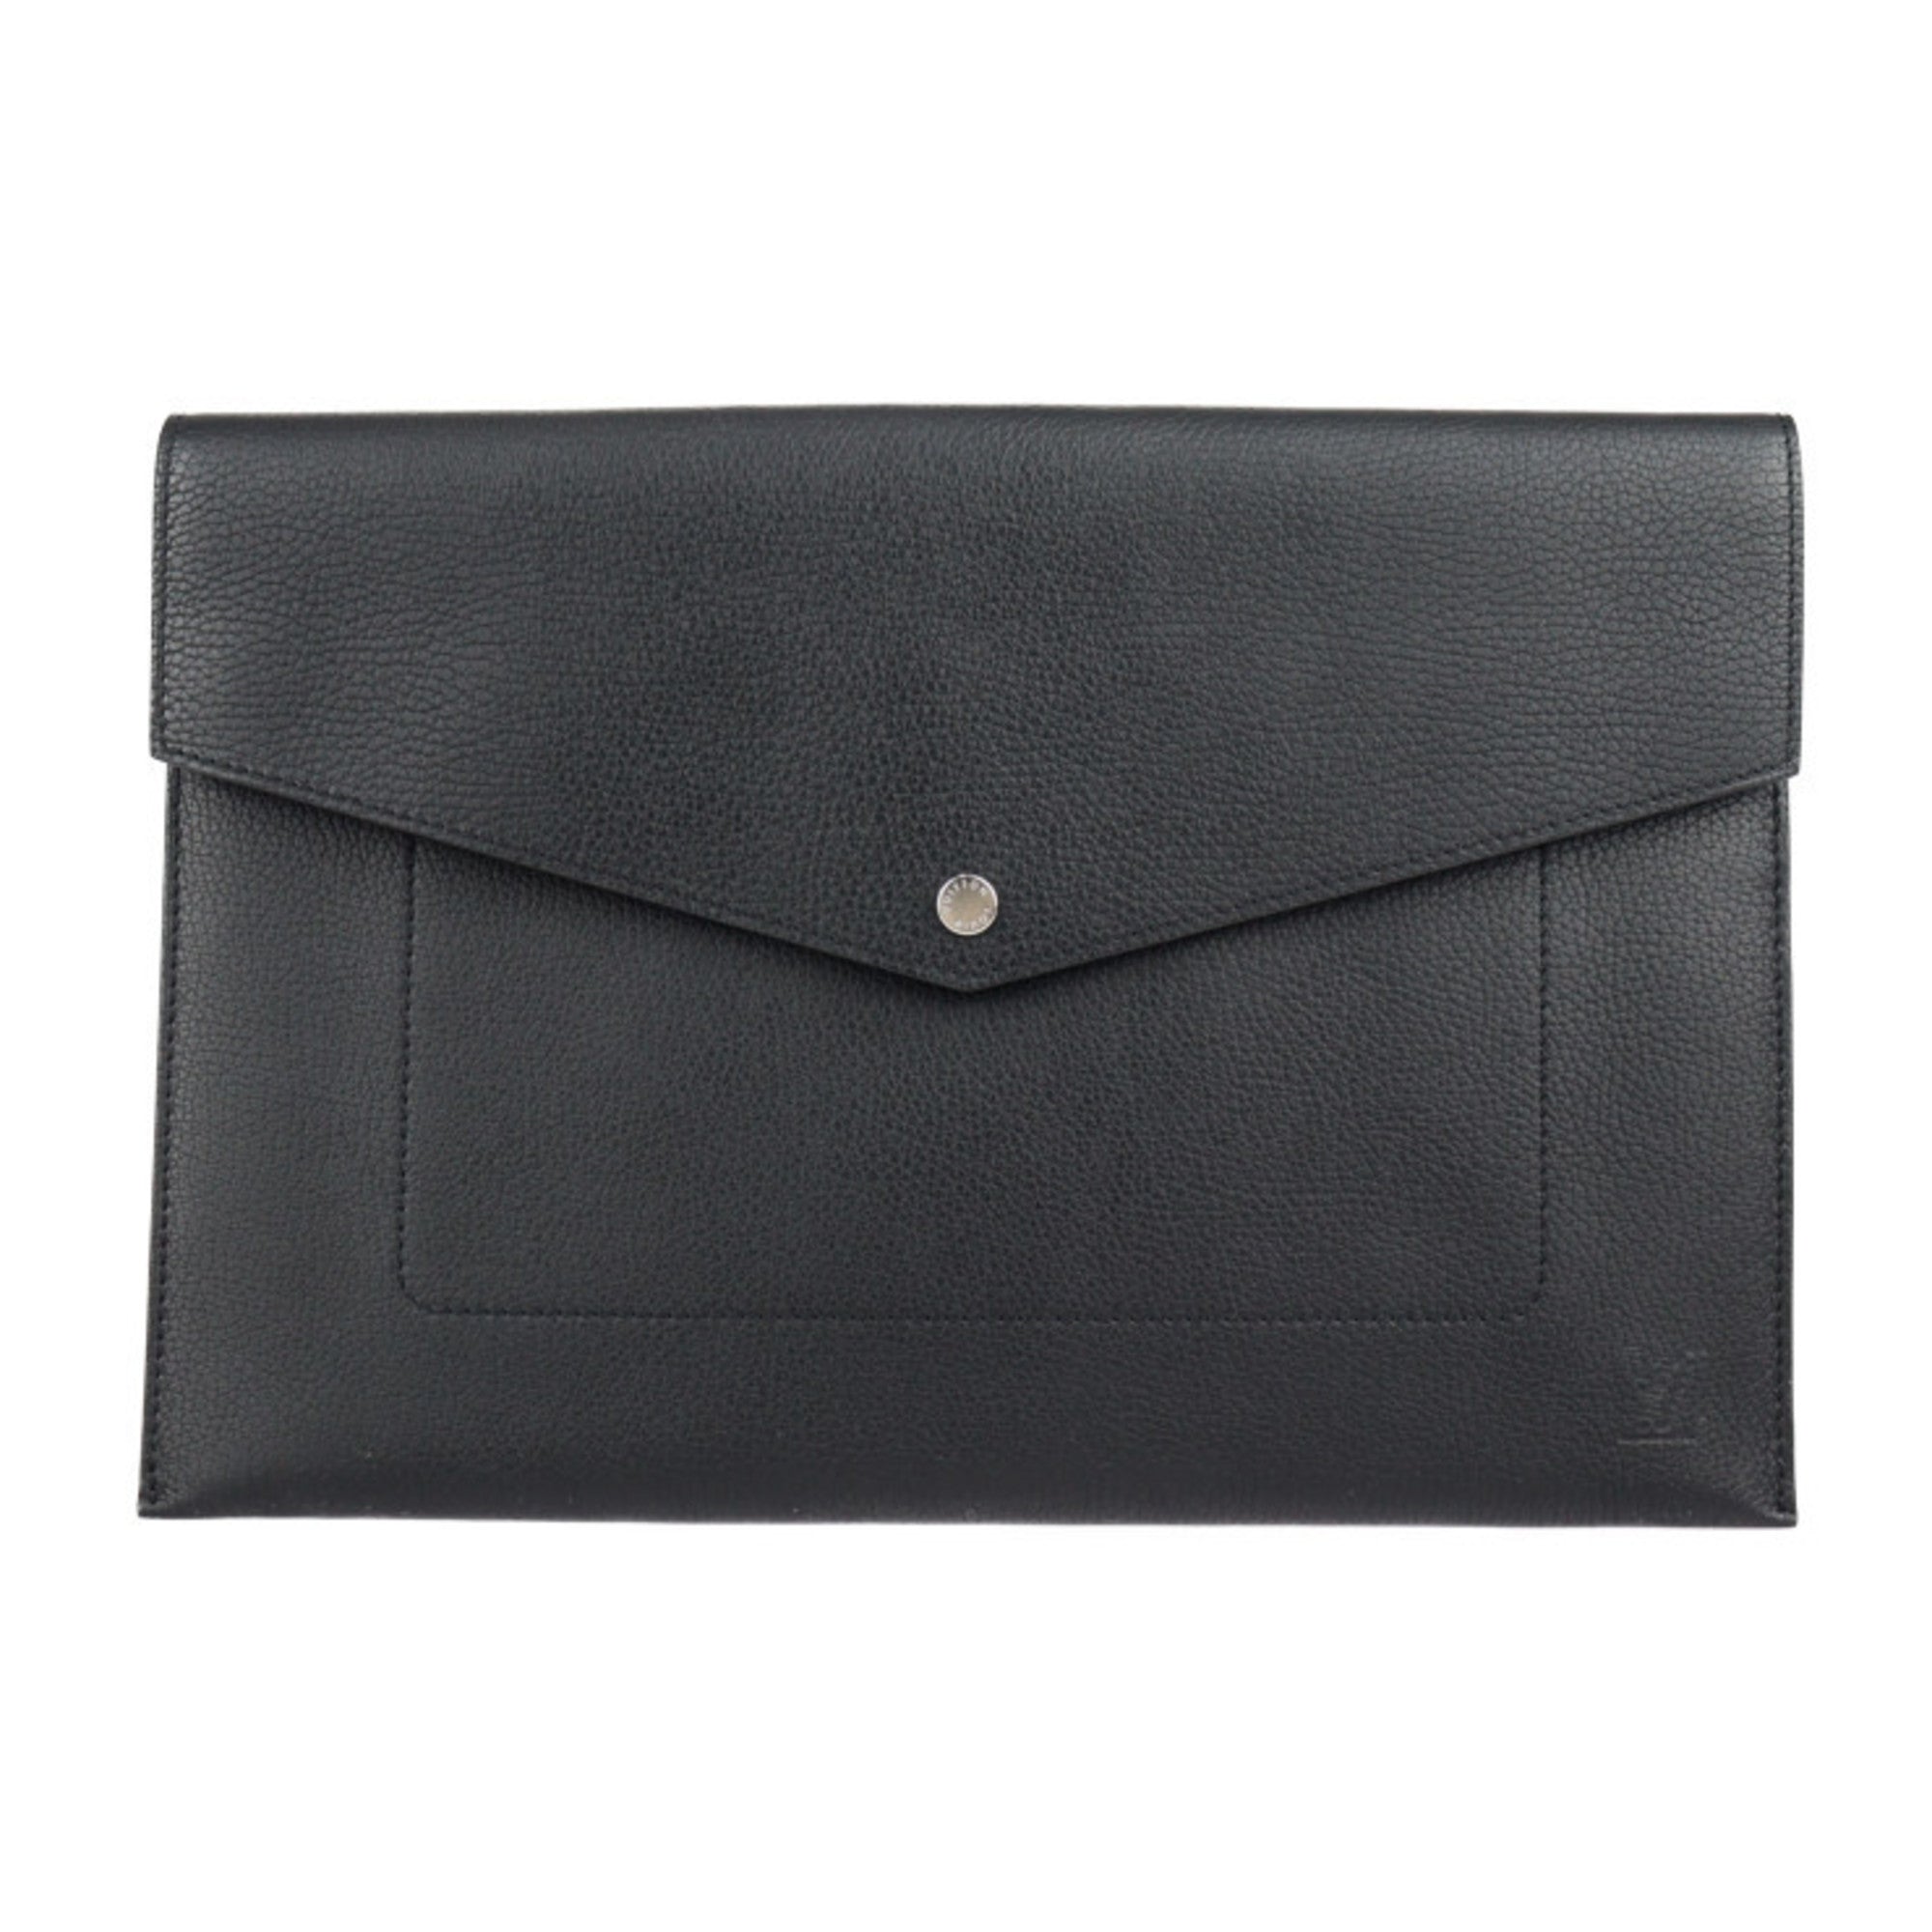 lv envelope bag black